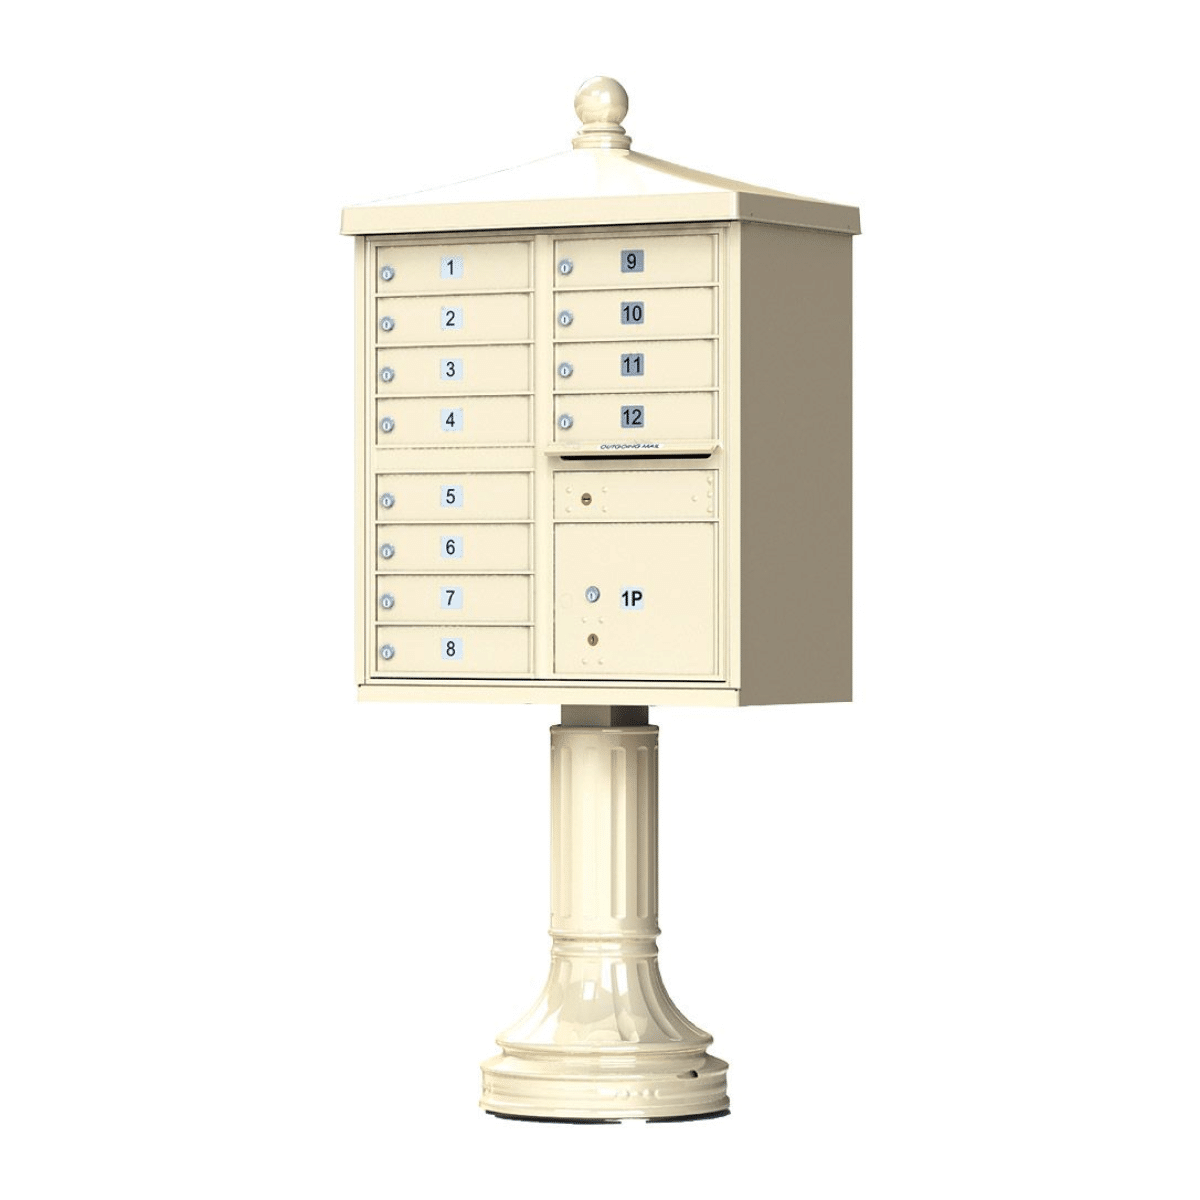 Florence CBU Cluster Mailbox – Vogue Traditional Kit, 12 Tenant Doors, 1 Parcel Locker Product Image